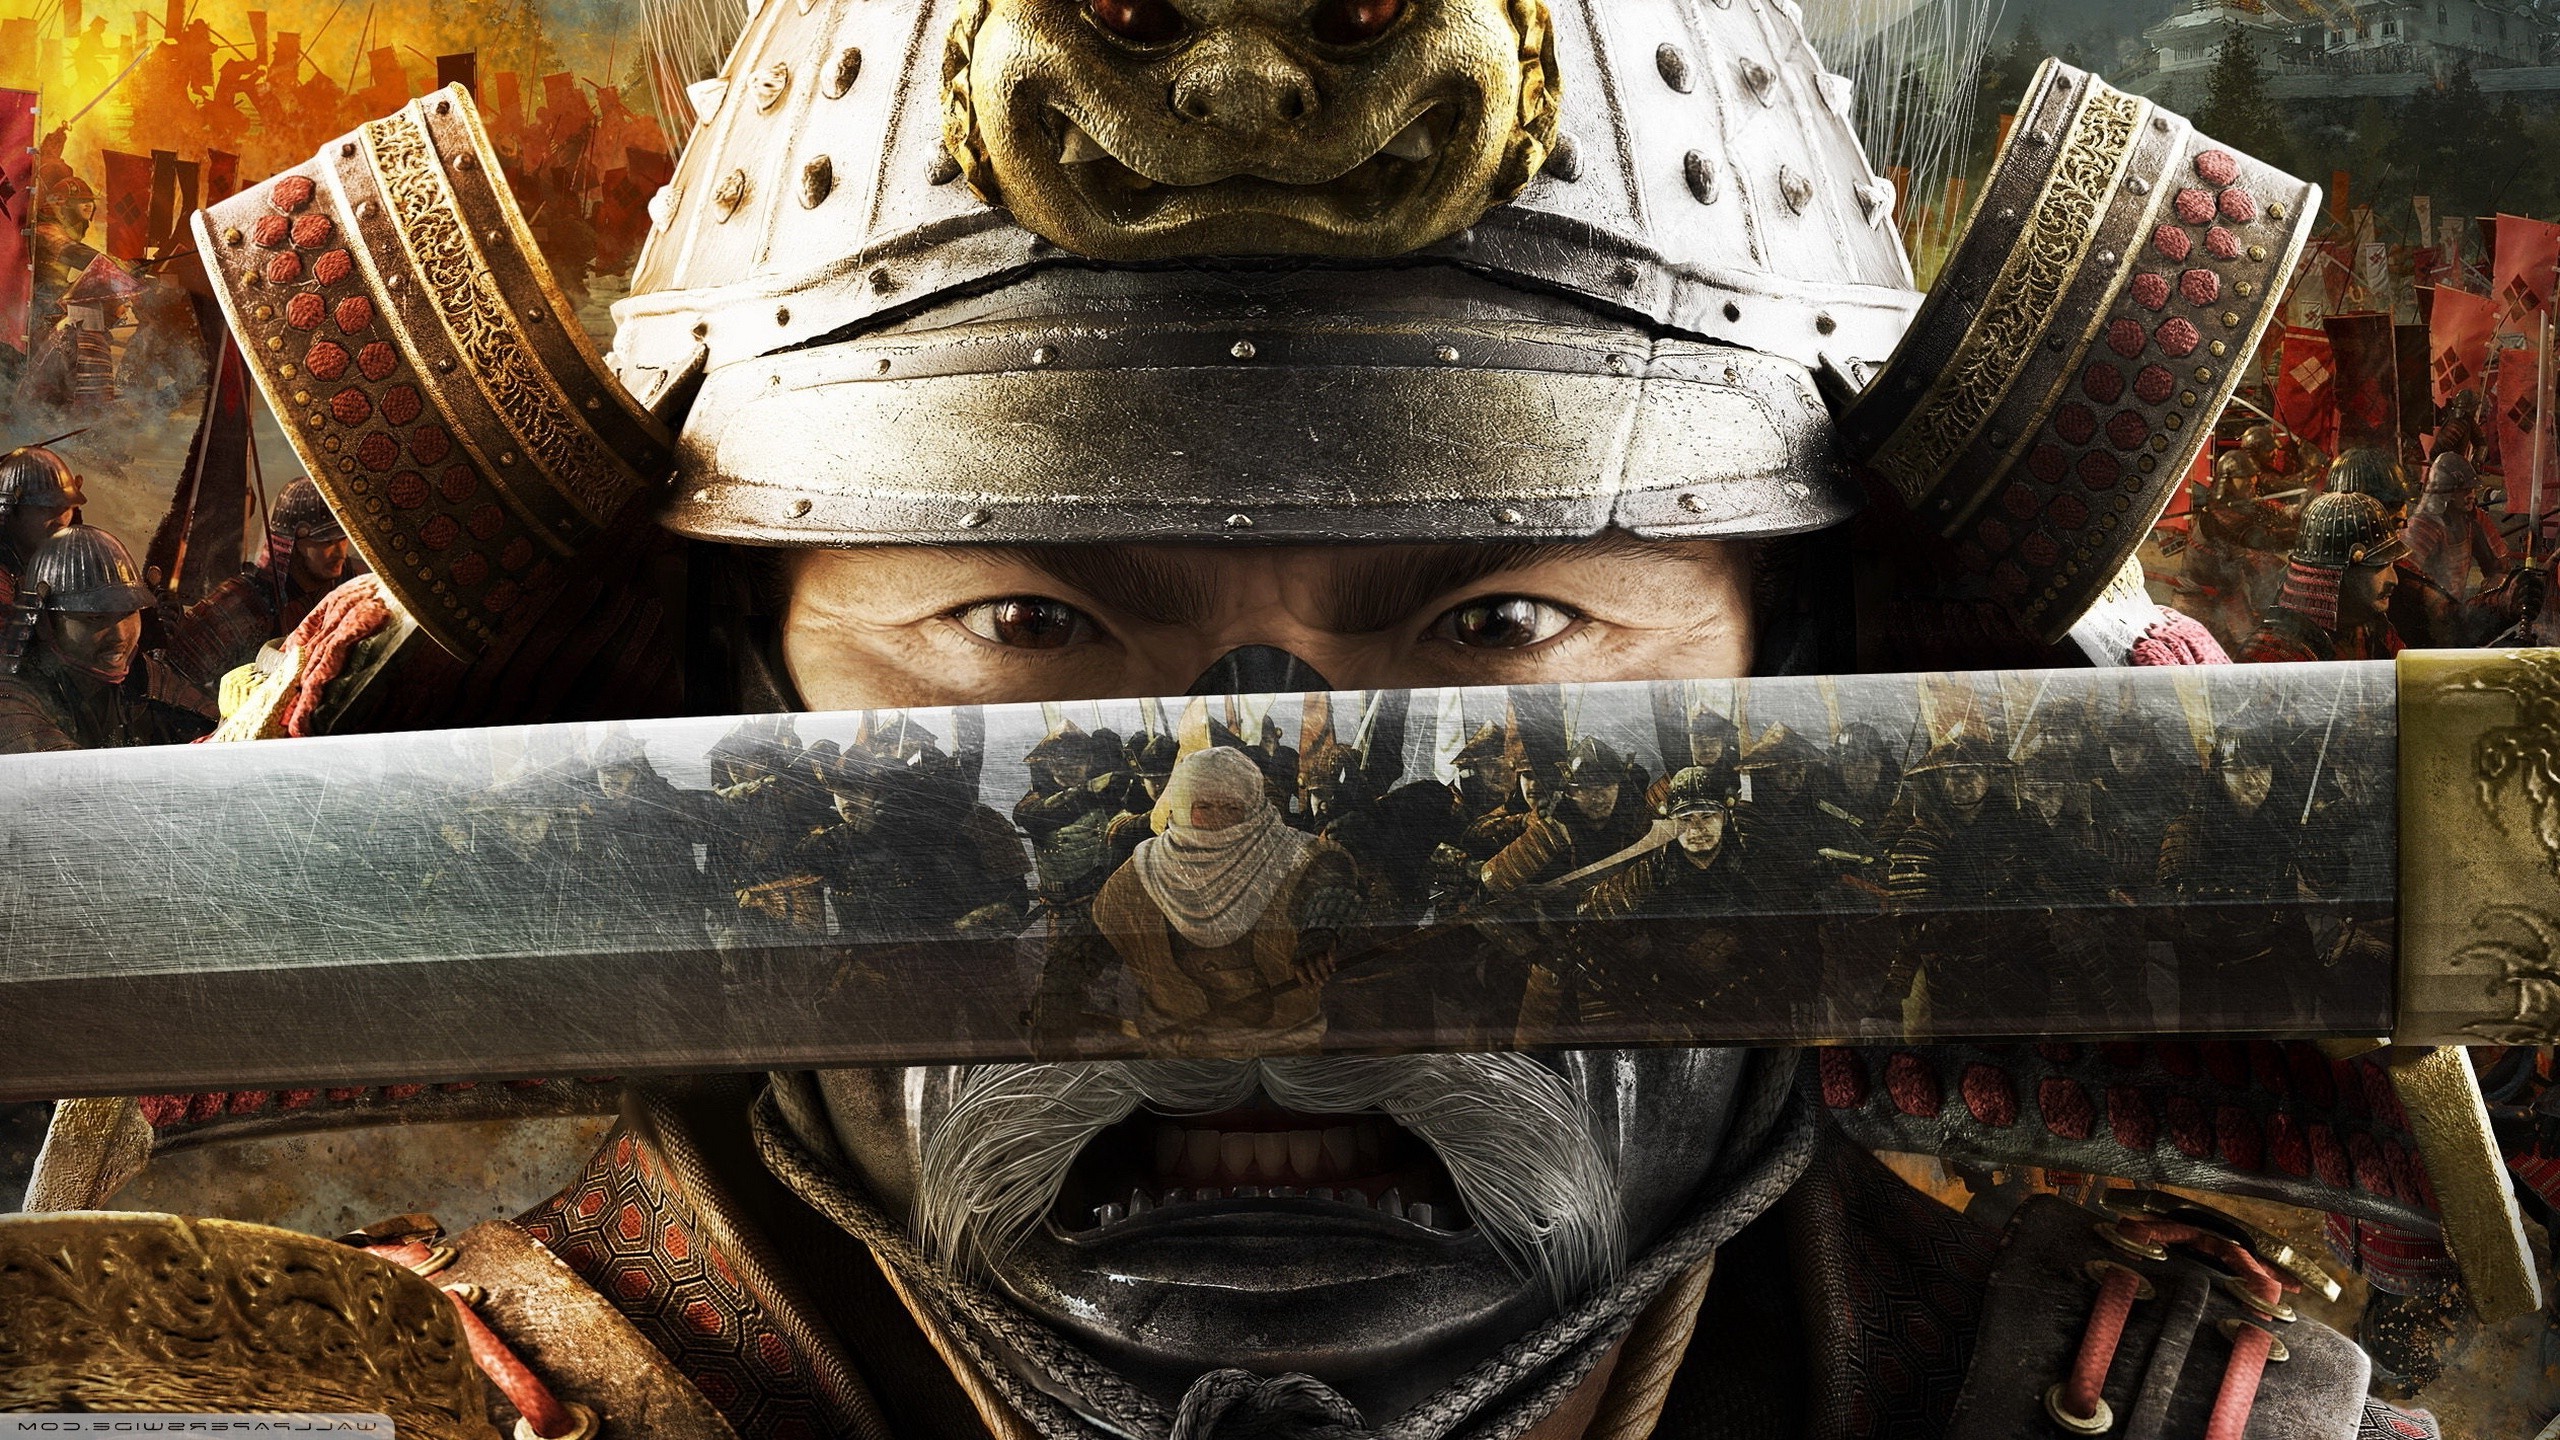 download total war shogun 2 battle for free